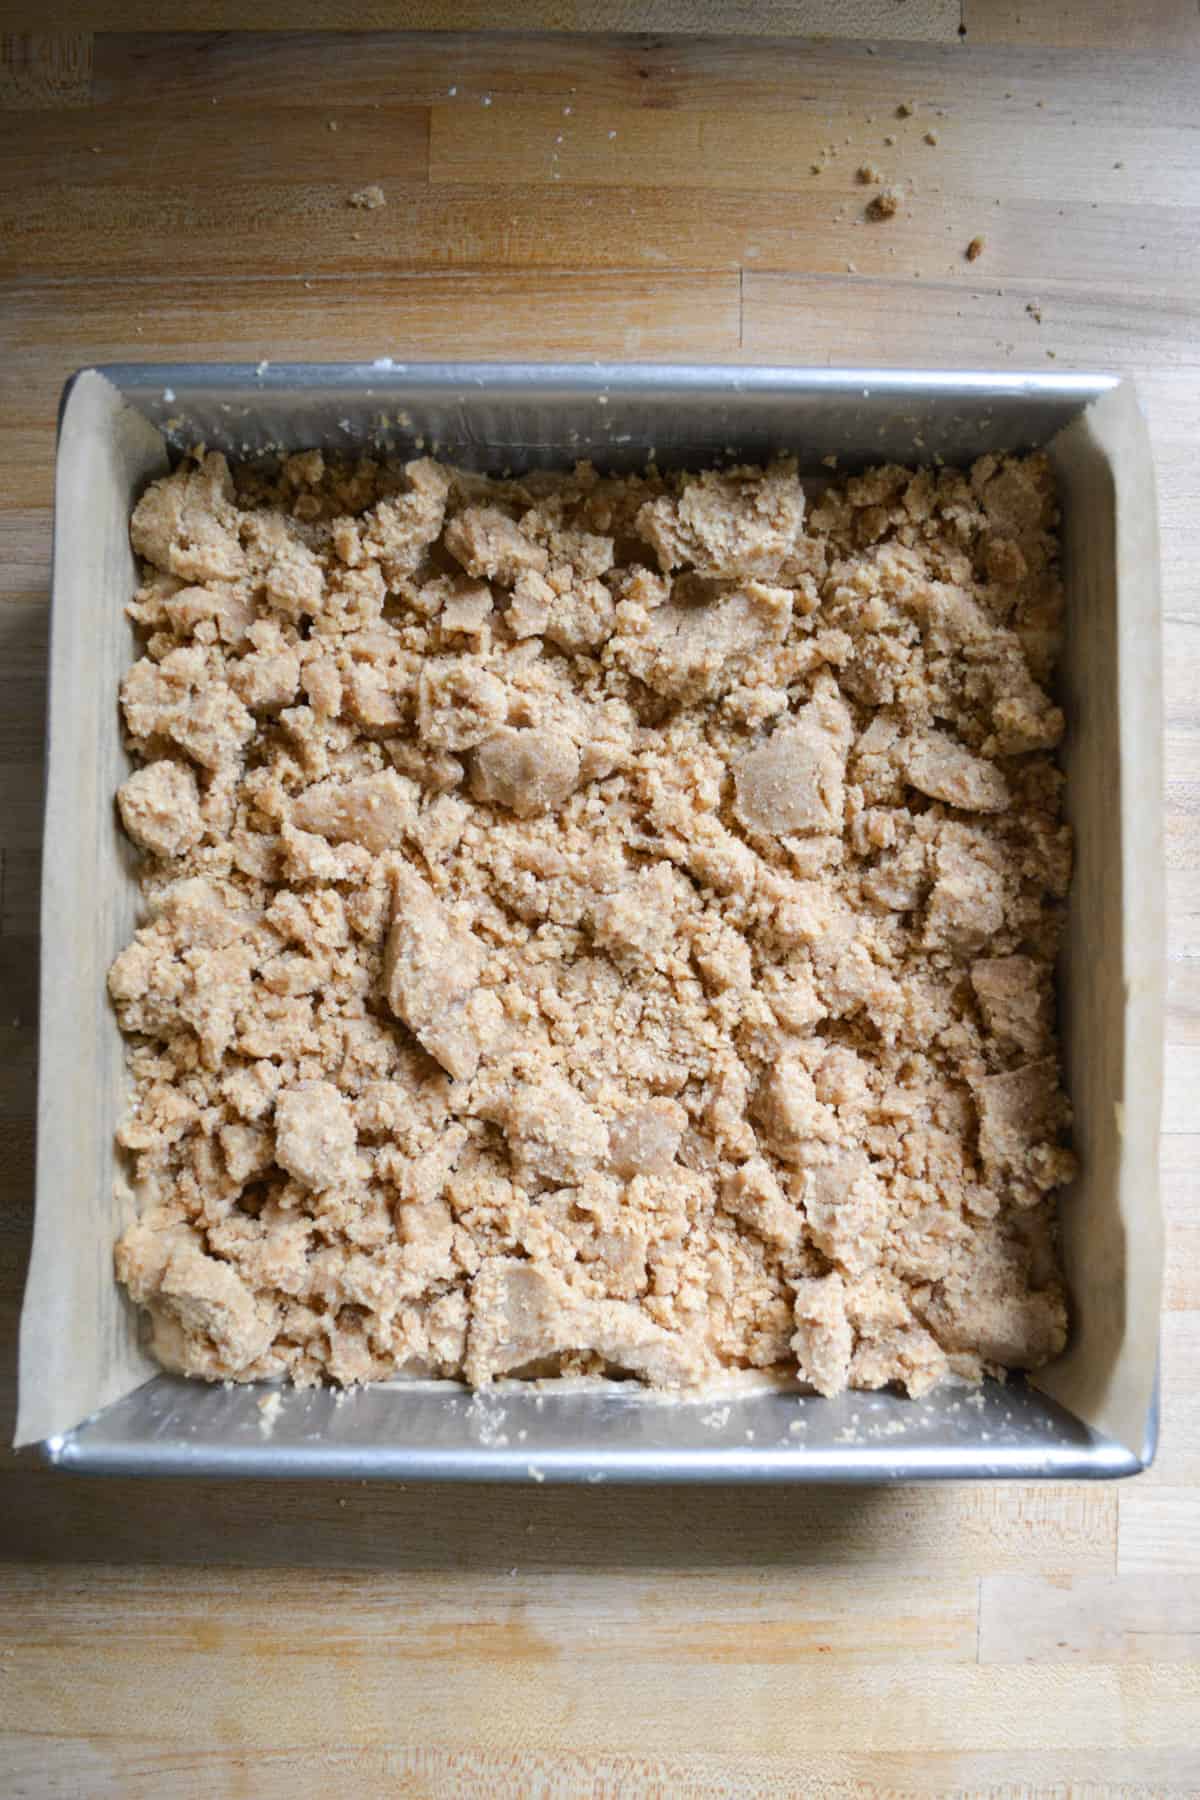 Vegan Apple Cinnamon Crumb Cake ready to bake.